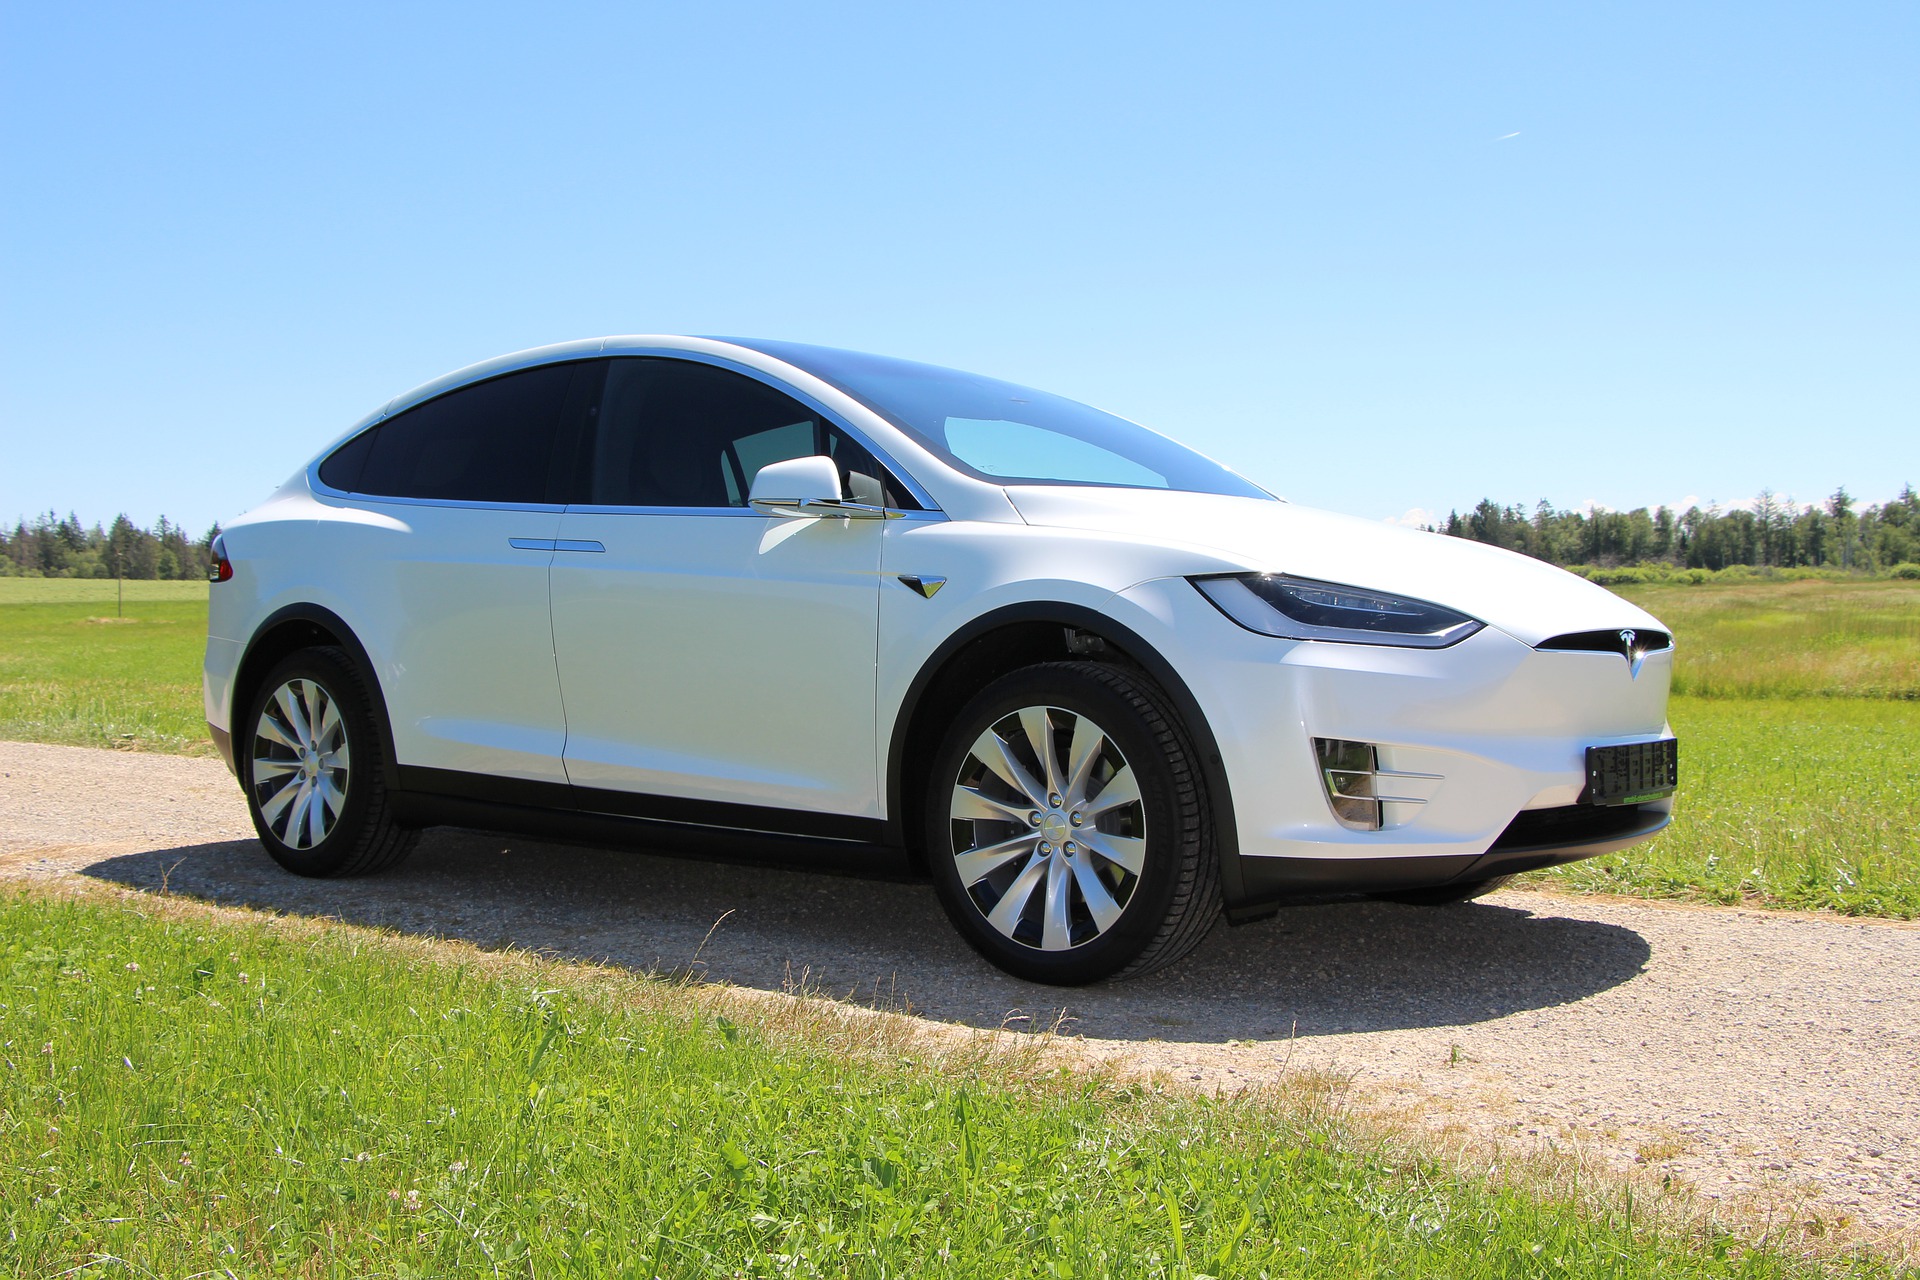 Full Self Driving Beta Testing Weeds Off Inattentive Tesla Drivers